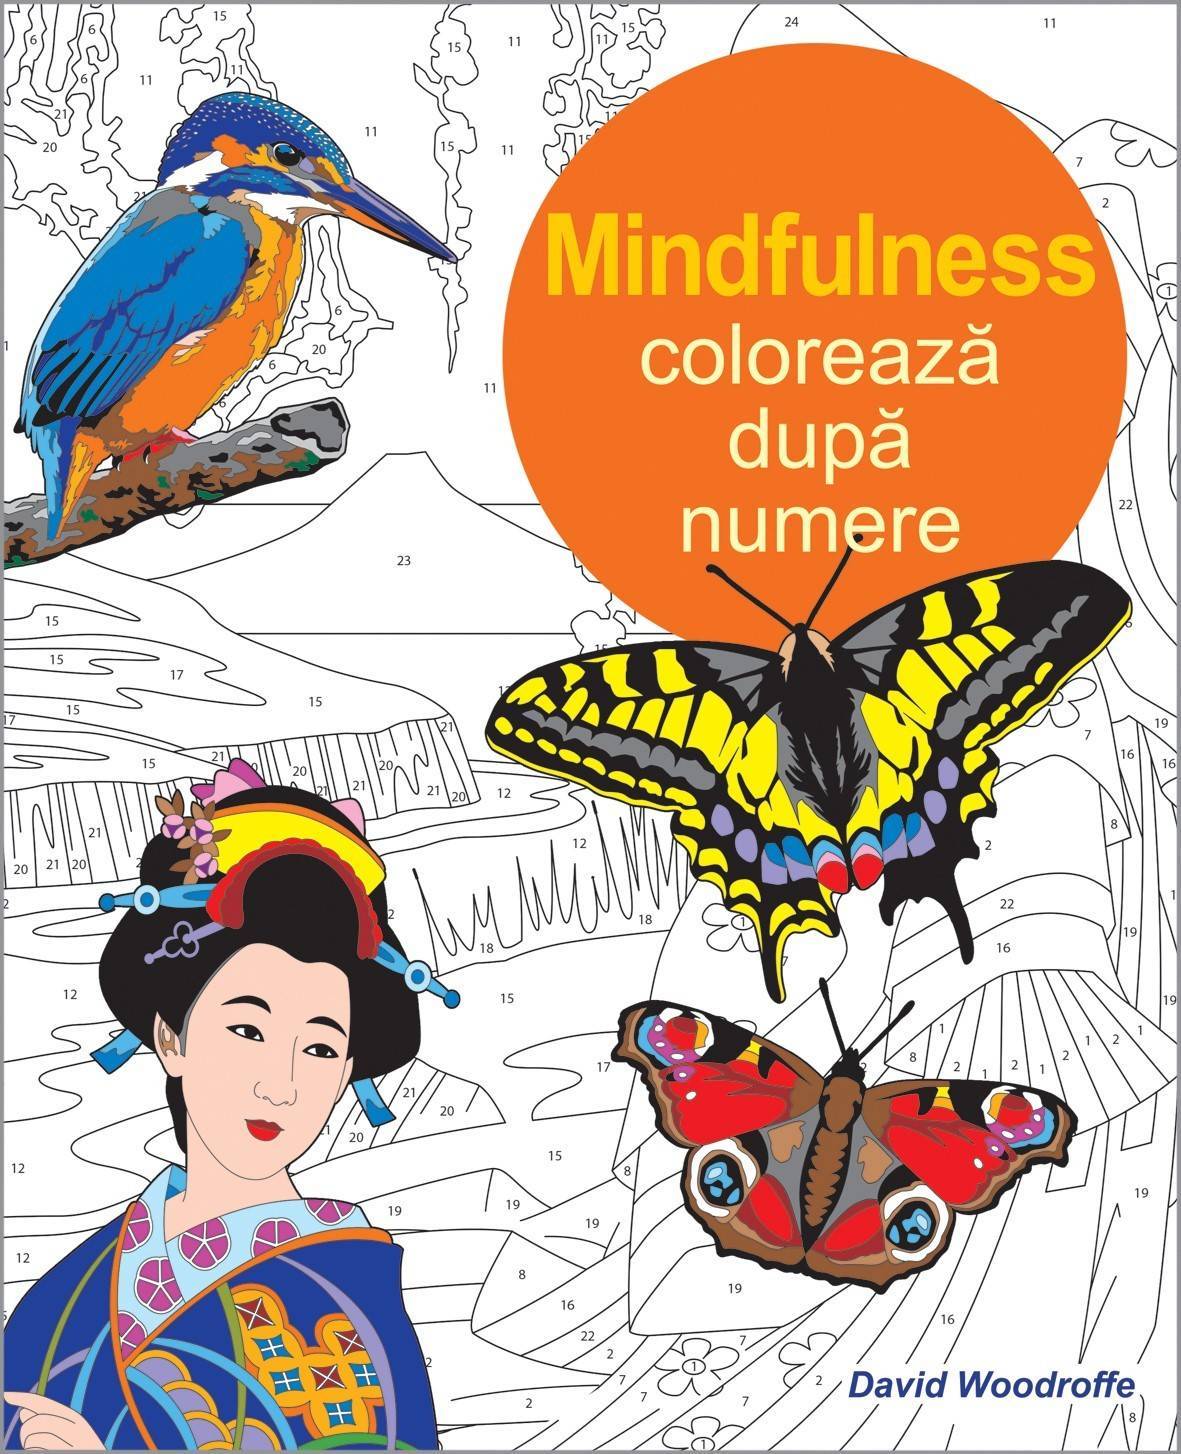 Coloreaza dupa numere - mindfulness - david woodroffe - carte - dph